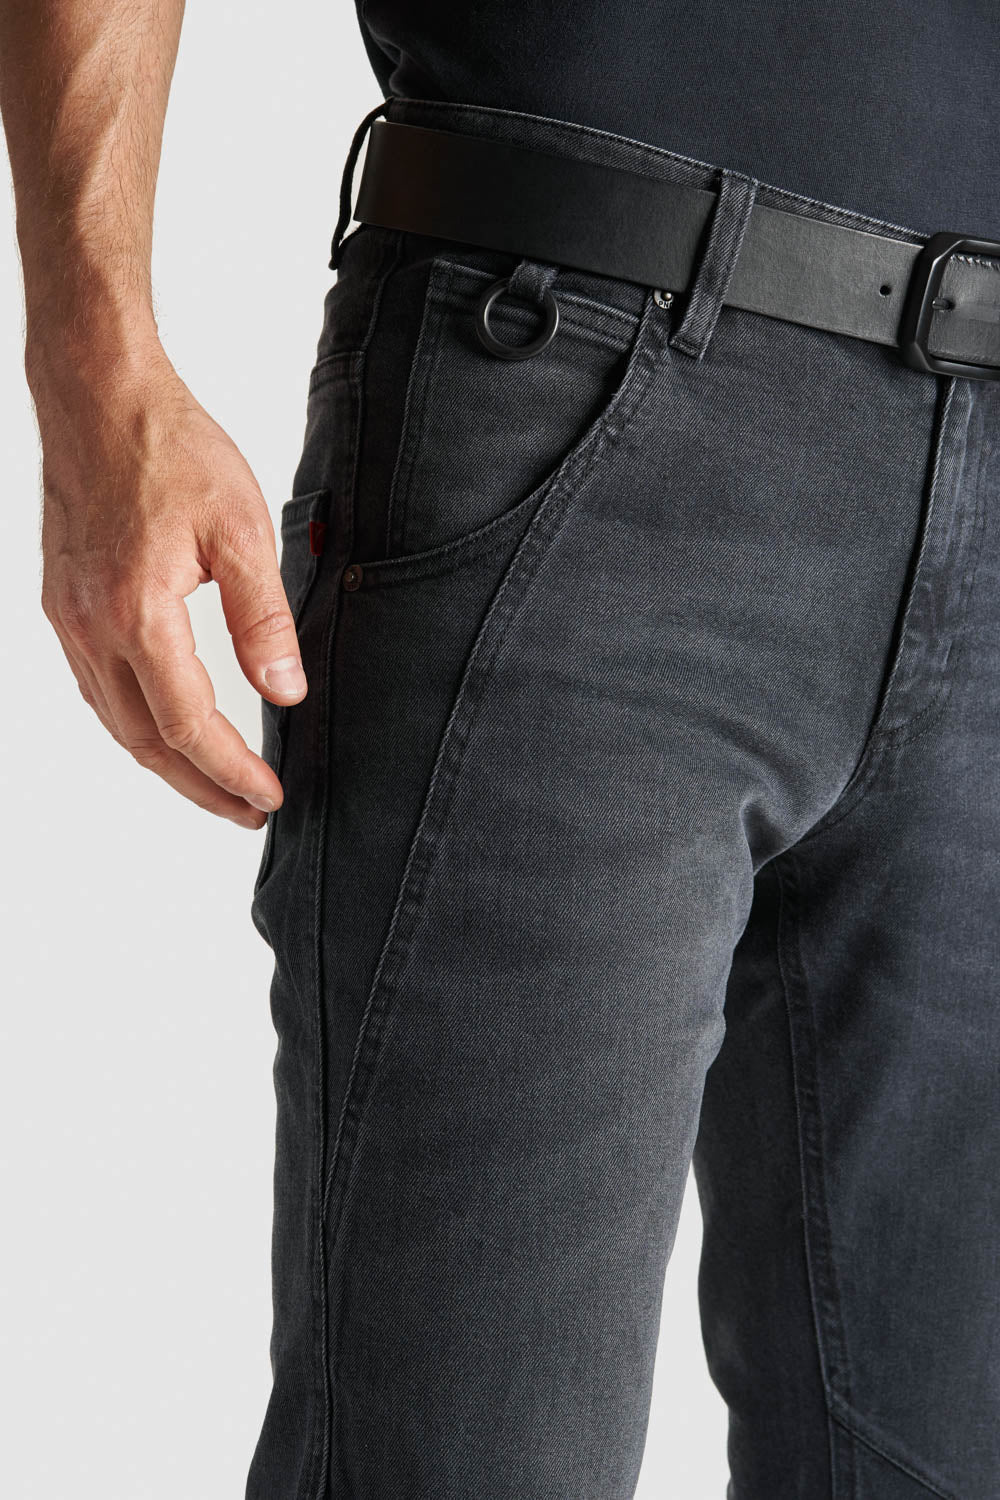 Pando Moto Robby SLIM Black Casual Jeans, Length 30